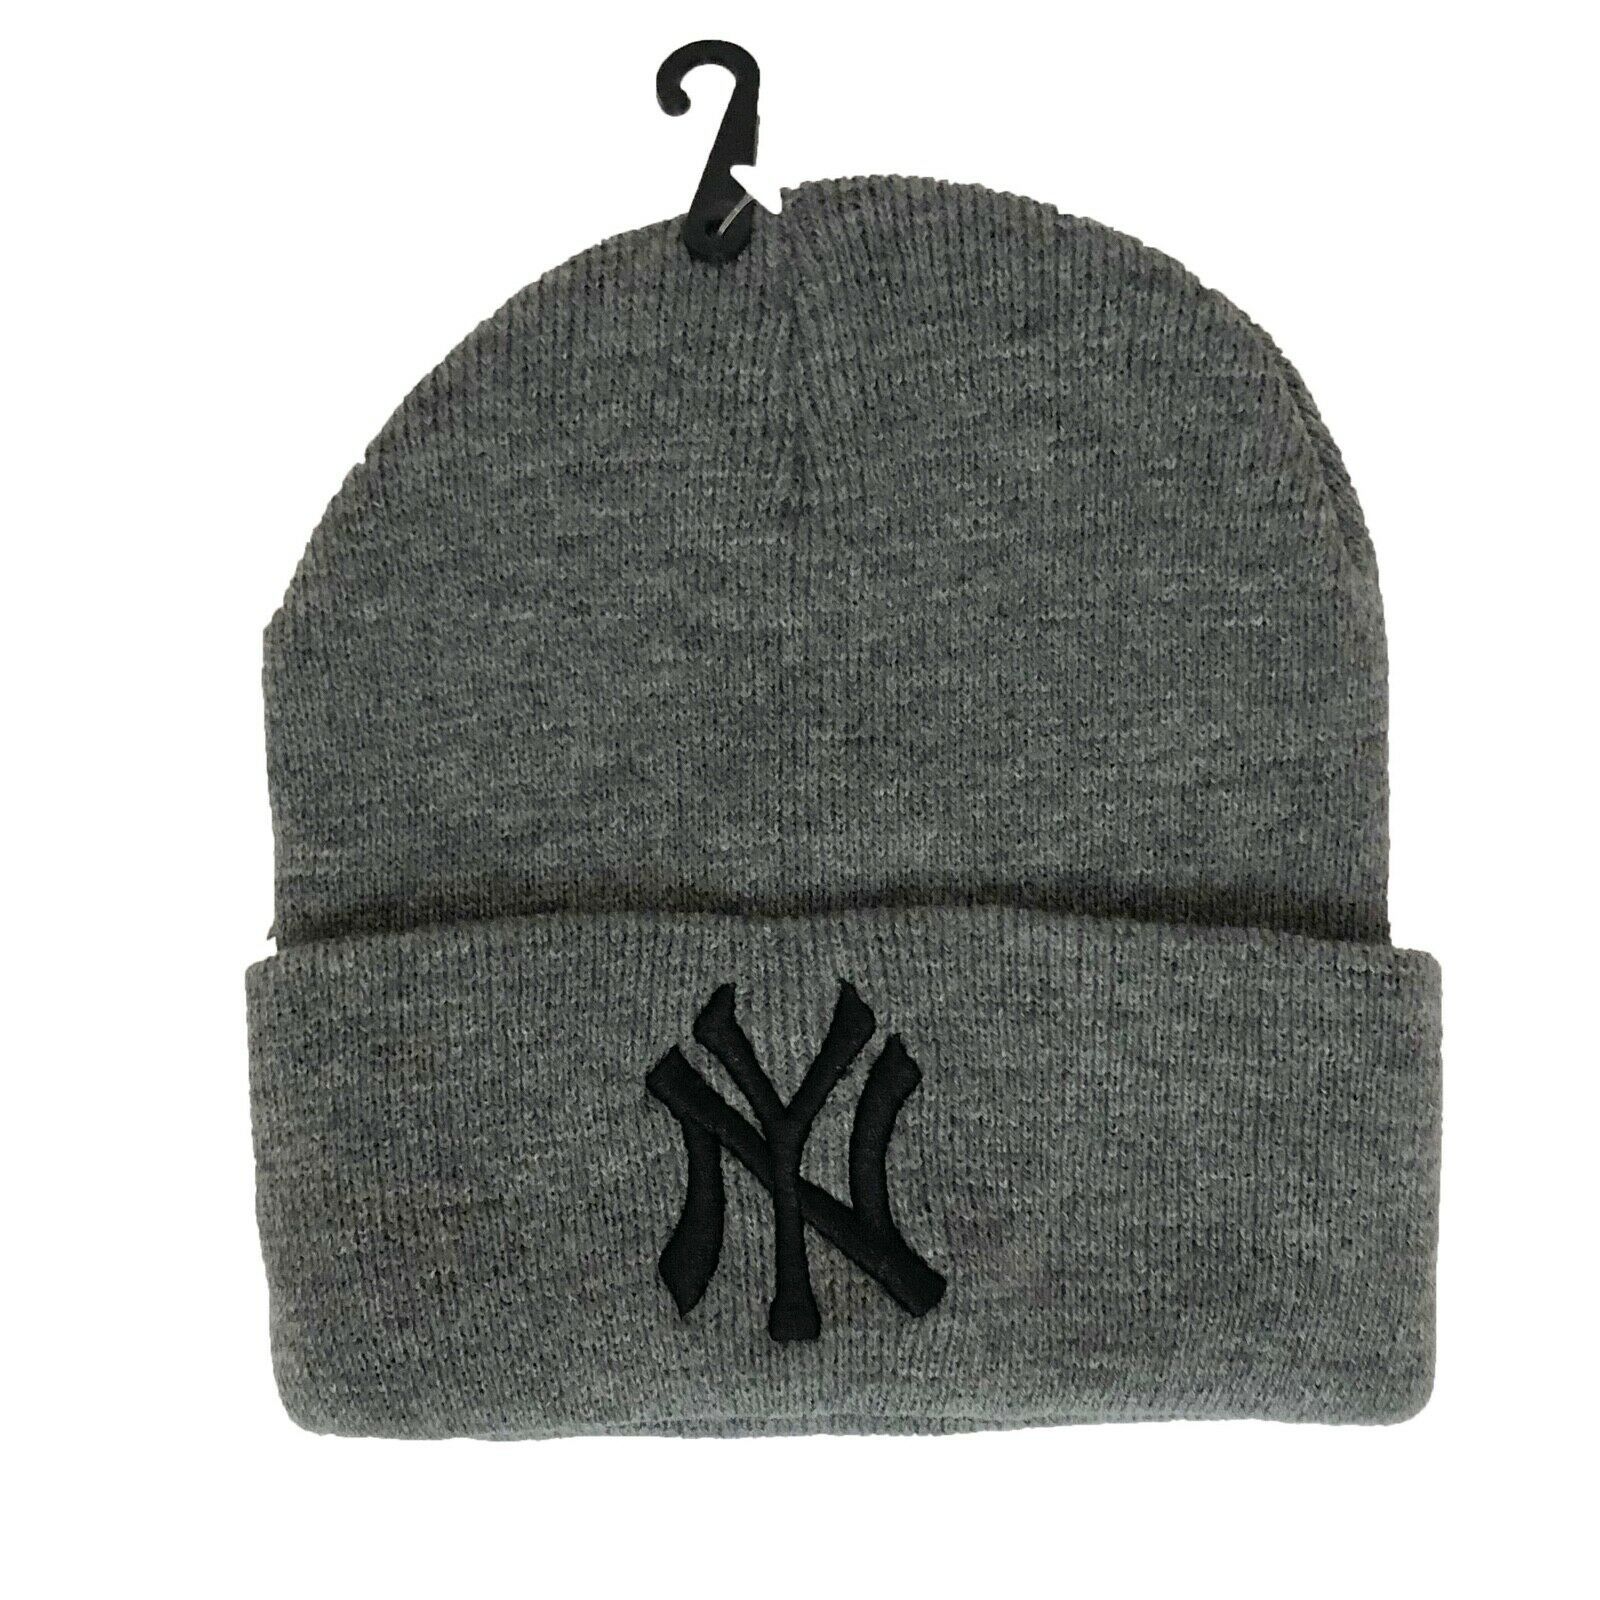 NEW Unisex New York Yankees Beanie Skull Cap Cuff Winter Warm Grey Gray One Size